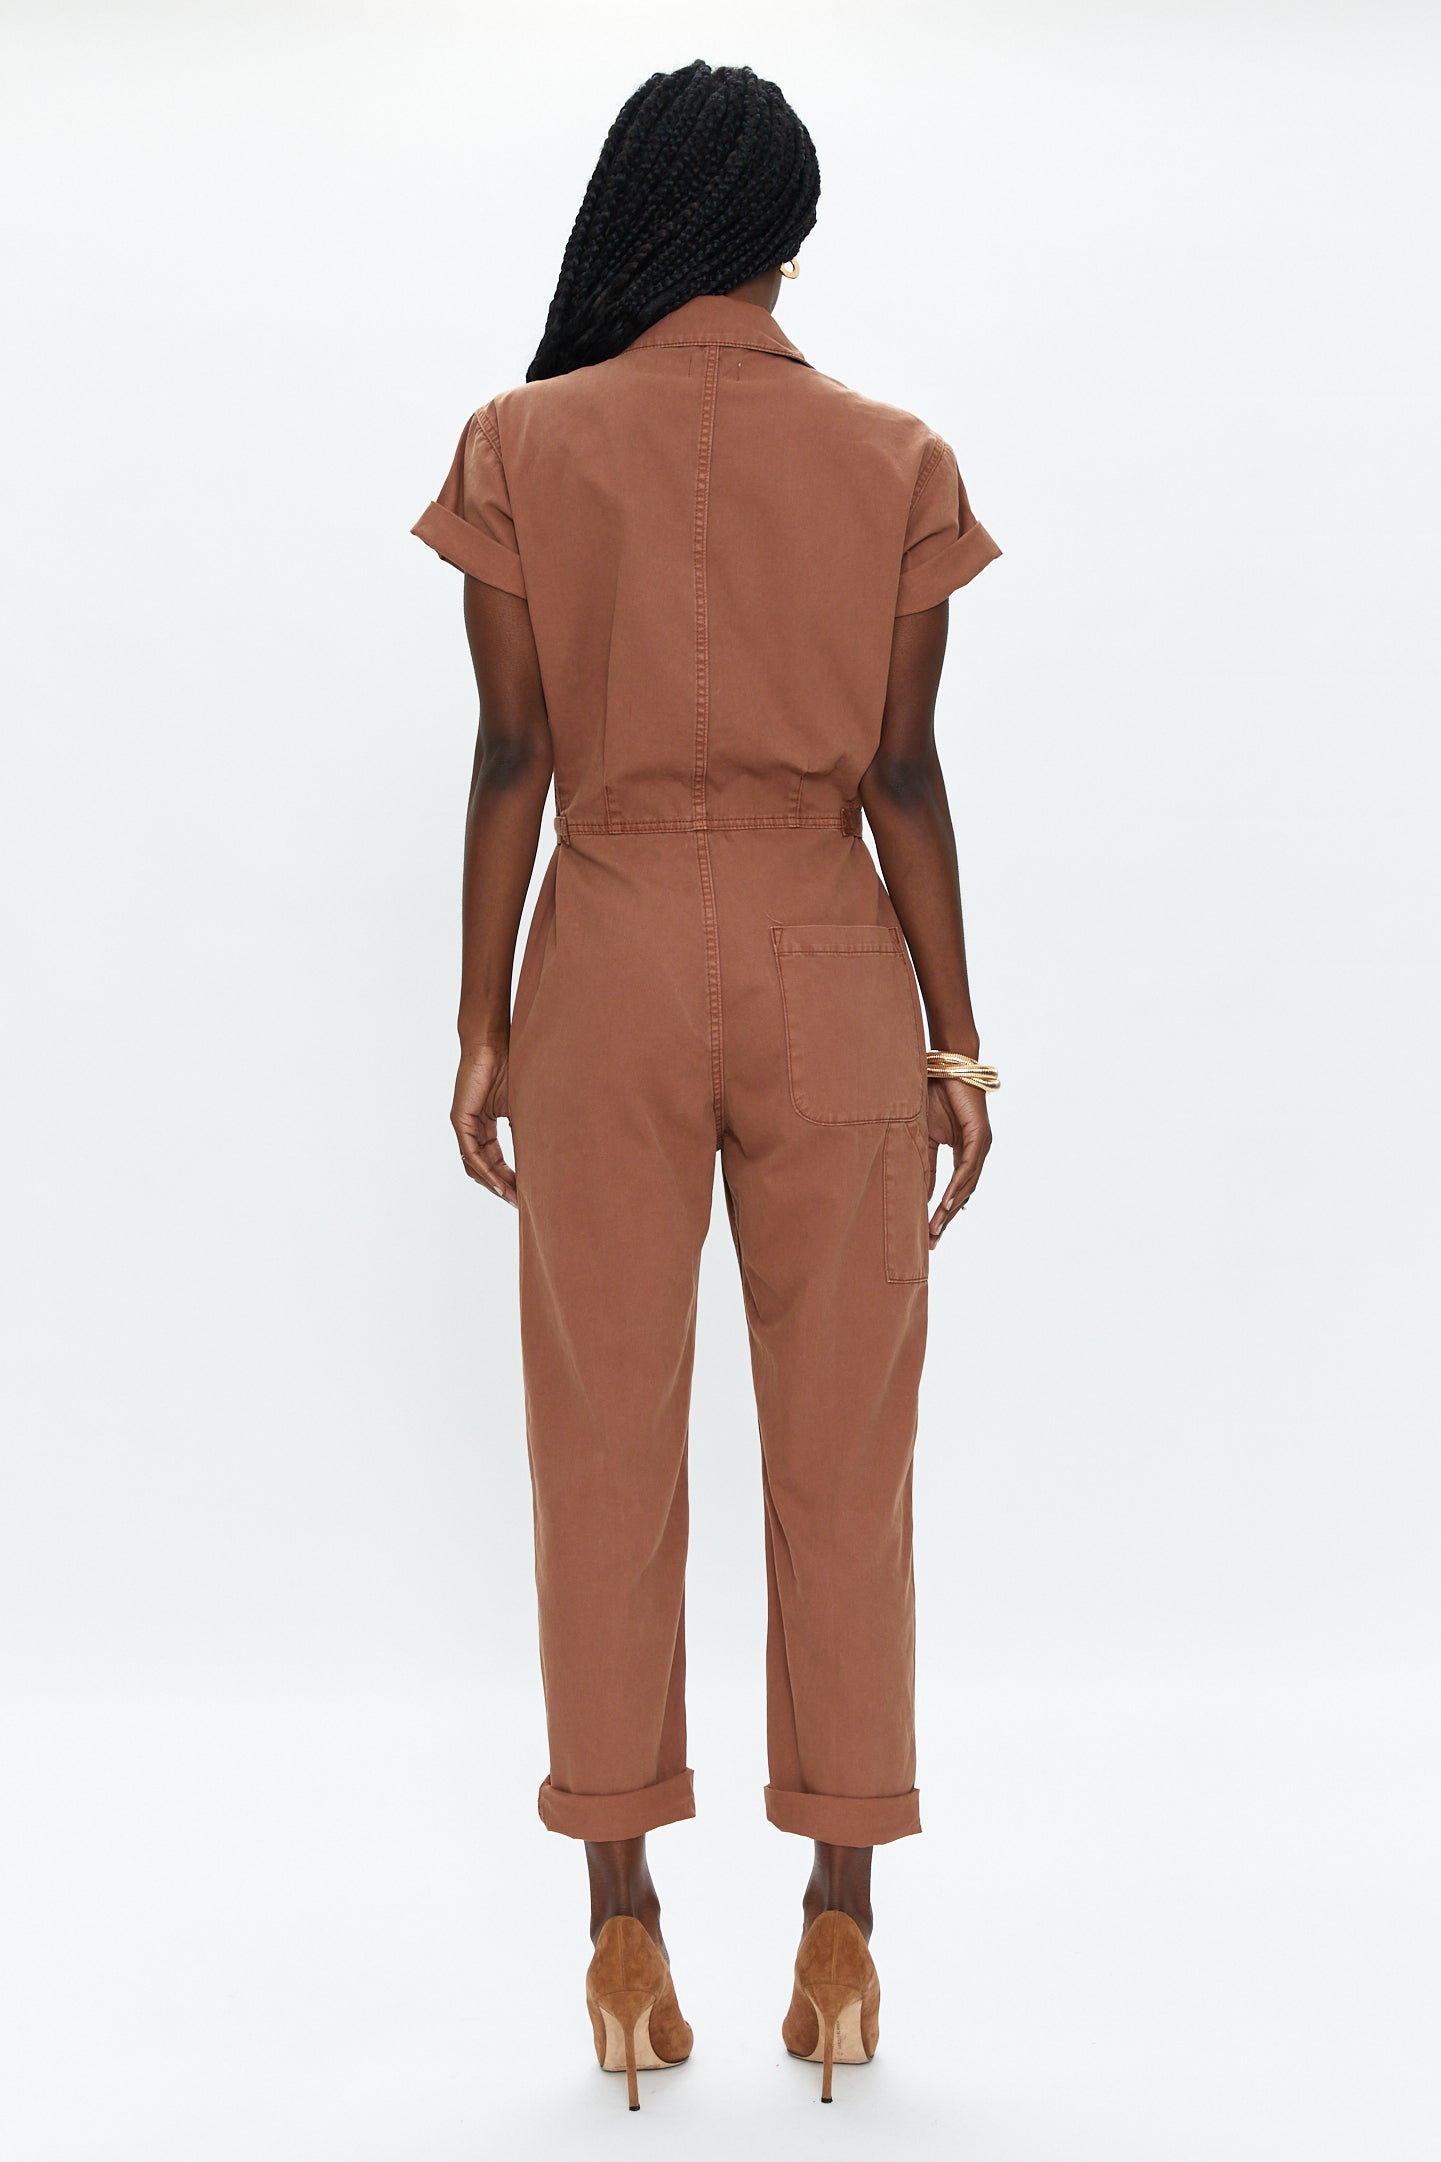 Grover Short Sleeve Field Suit - Cinnamon